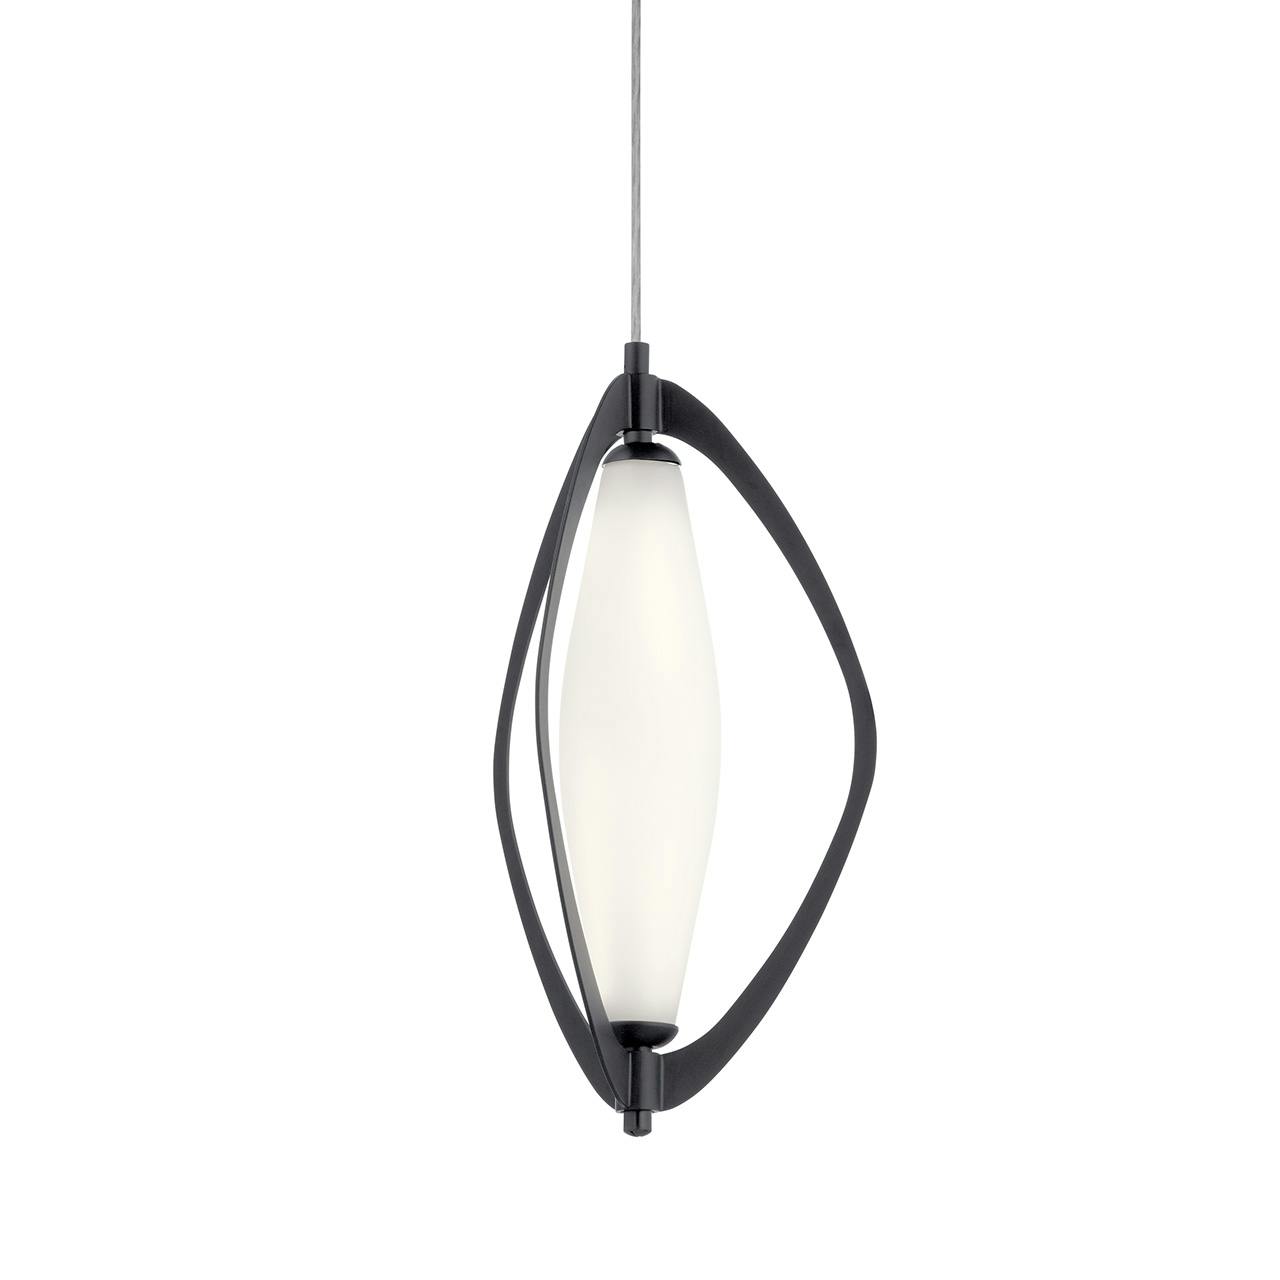 Kivik LED 3000K 11.75" Pendant Black without the canopy on a white background